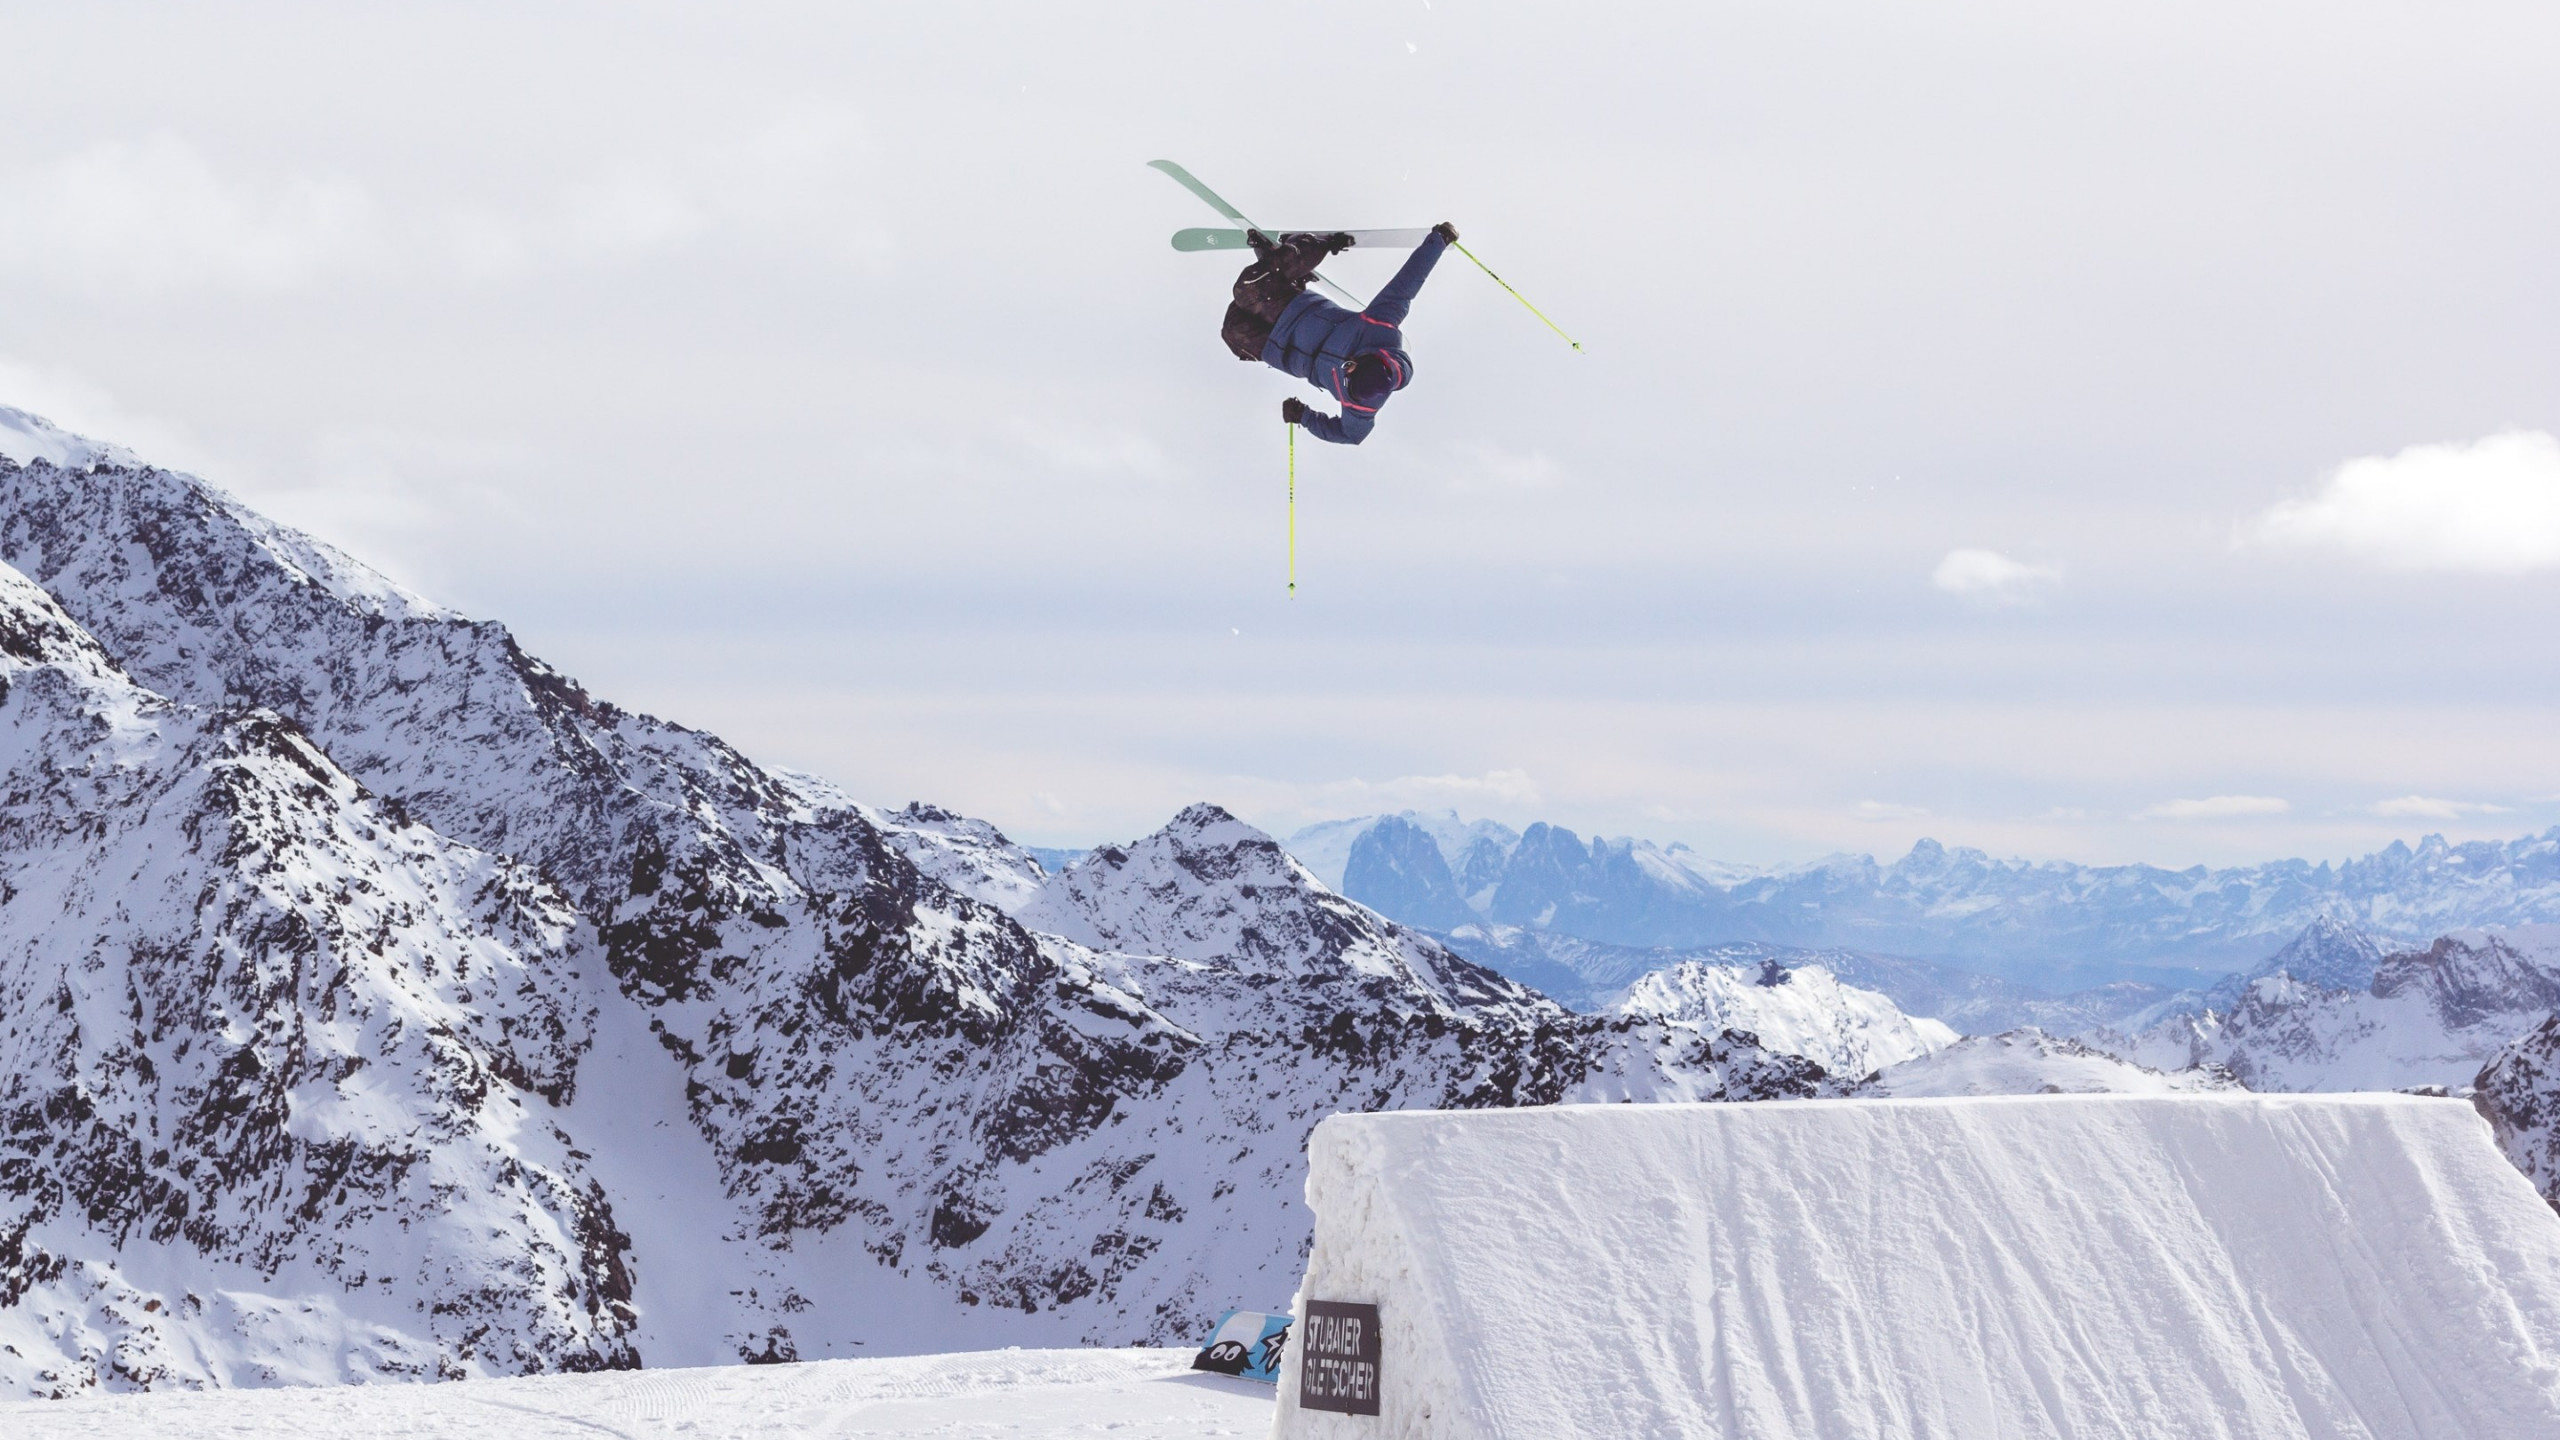 Acrobatic skiing wallpaper 2560x1440